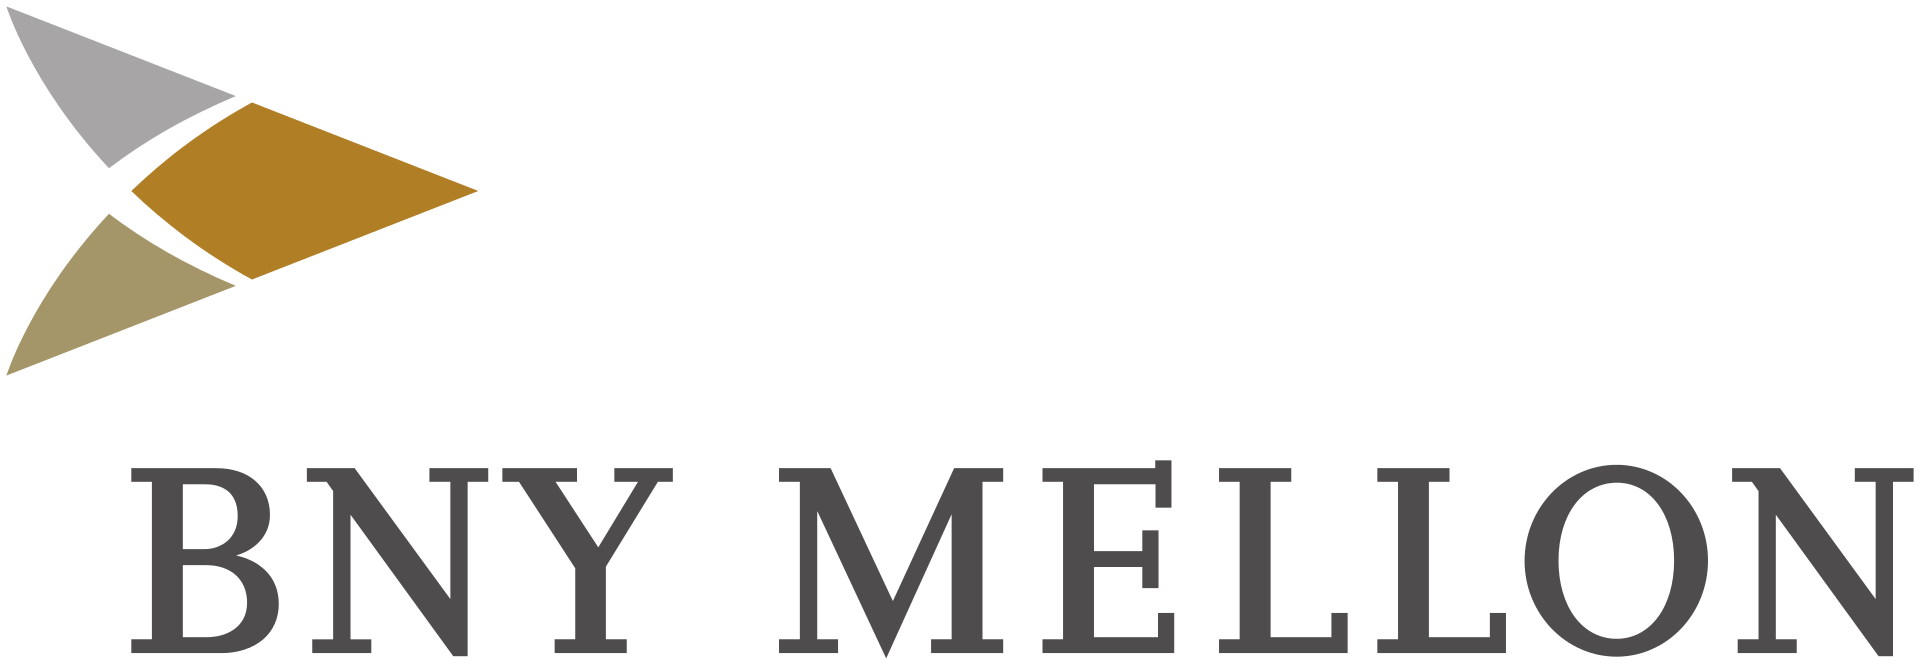 BNY Mellon logo, By BNY Mellon - http://www.bnymellon.com/news/factsheet.pdf, Public Domain, https://en.wikipedia.org/w/index.php?curid=38972378"